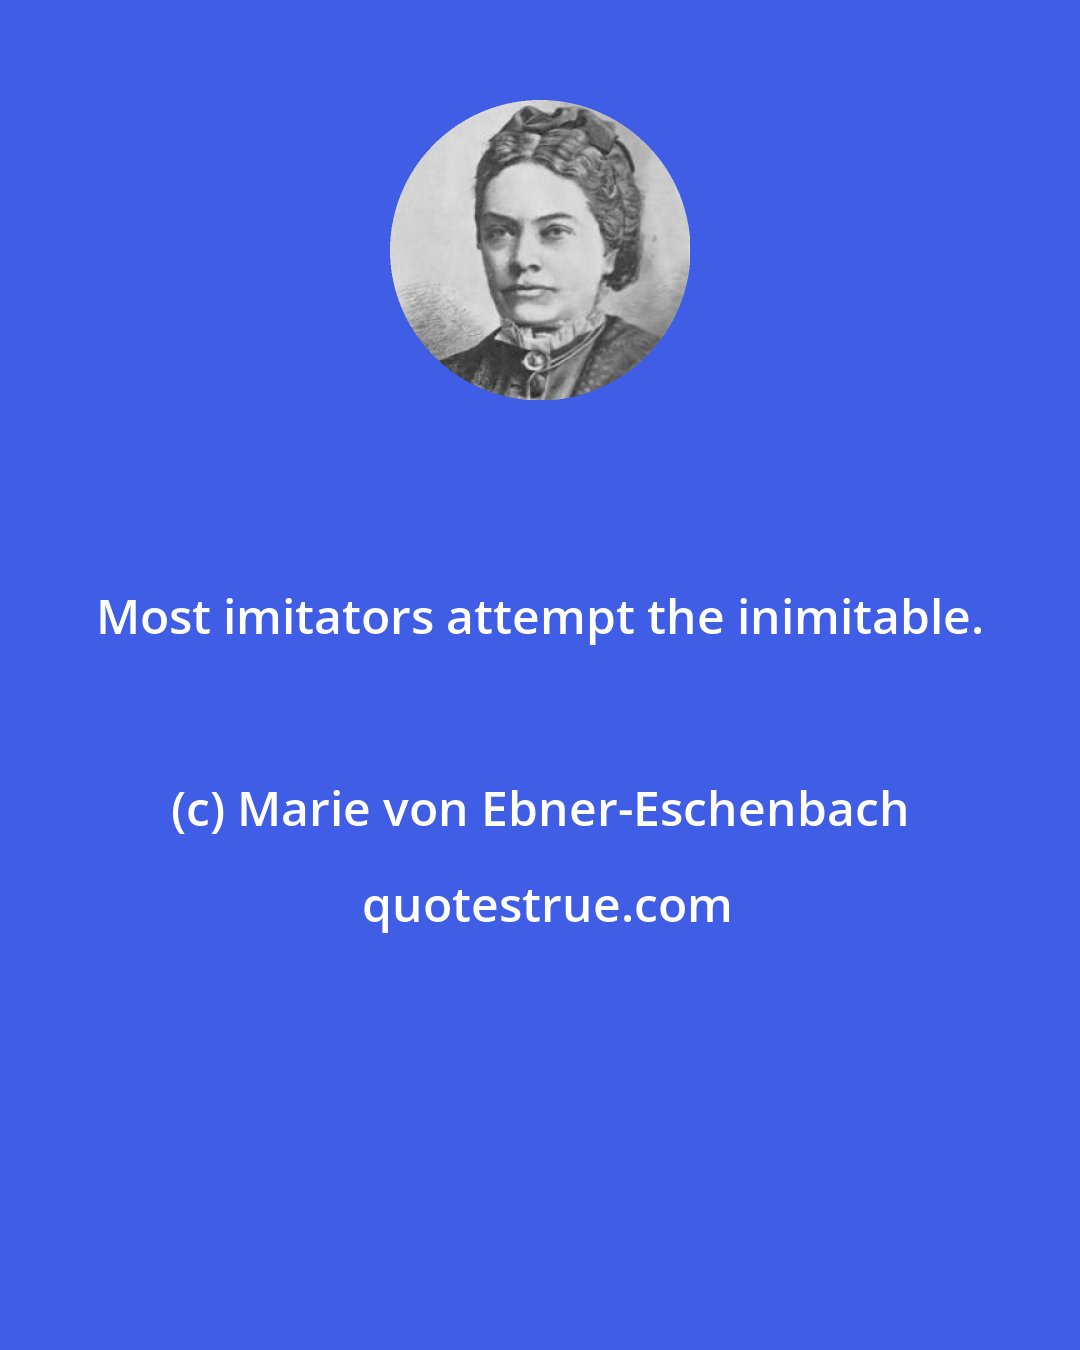 Marie von Ebner-Eschenbach: Most imitators attempt the inimitable.